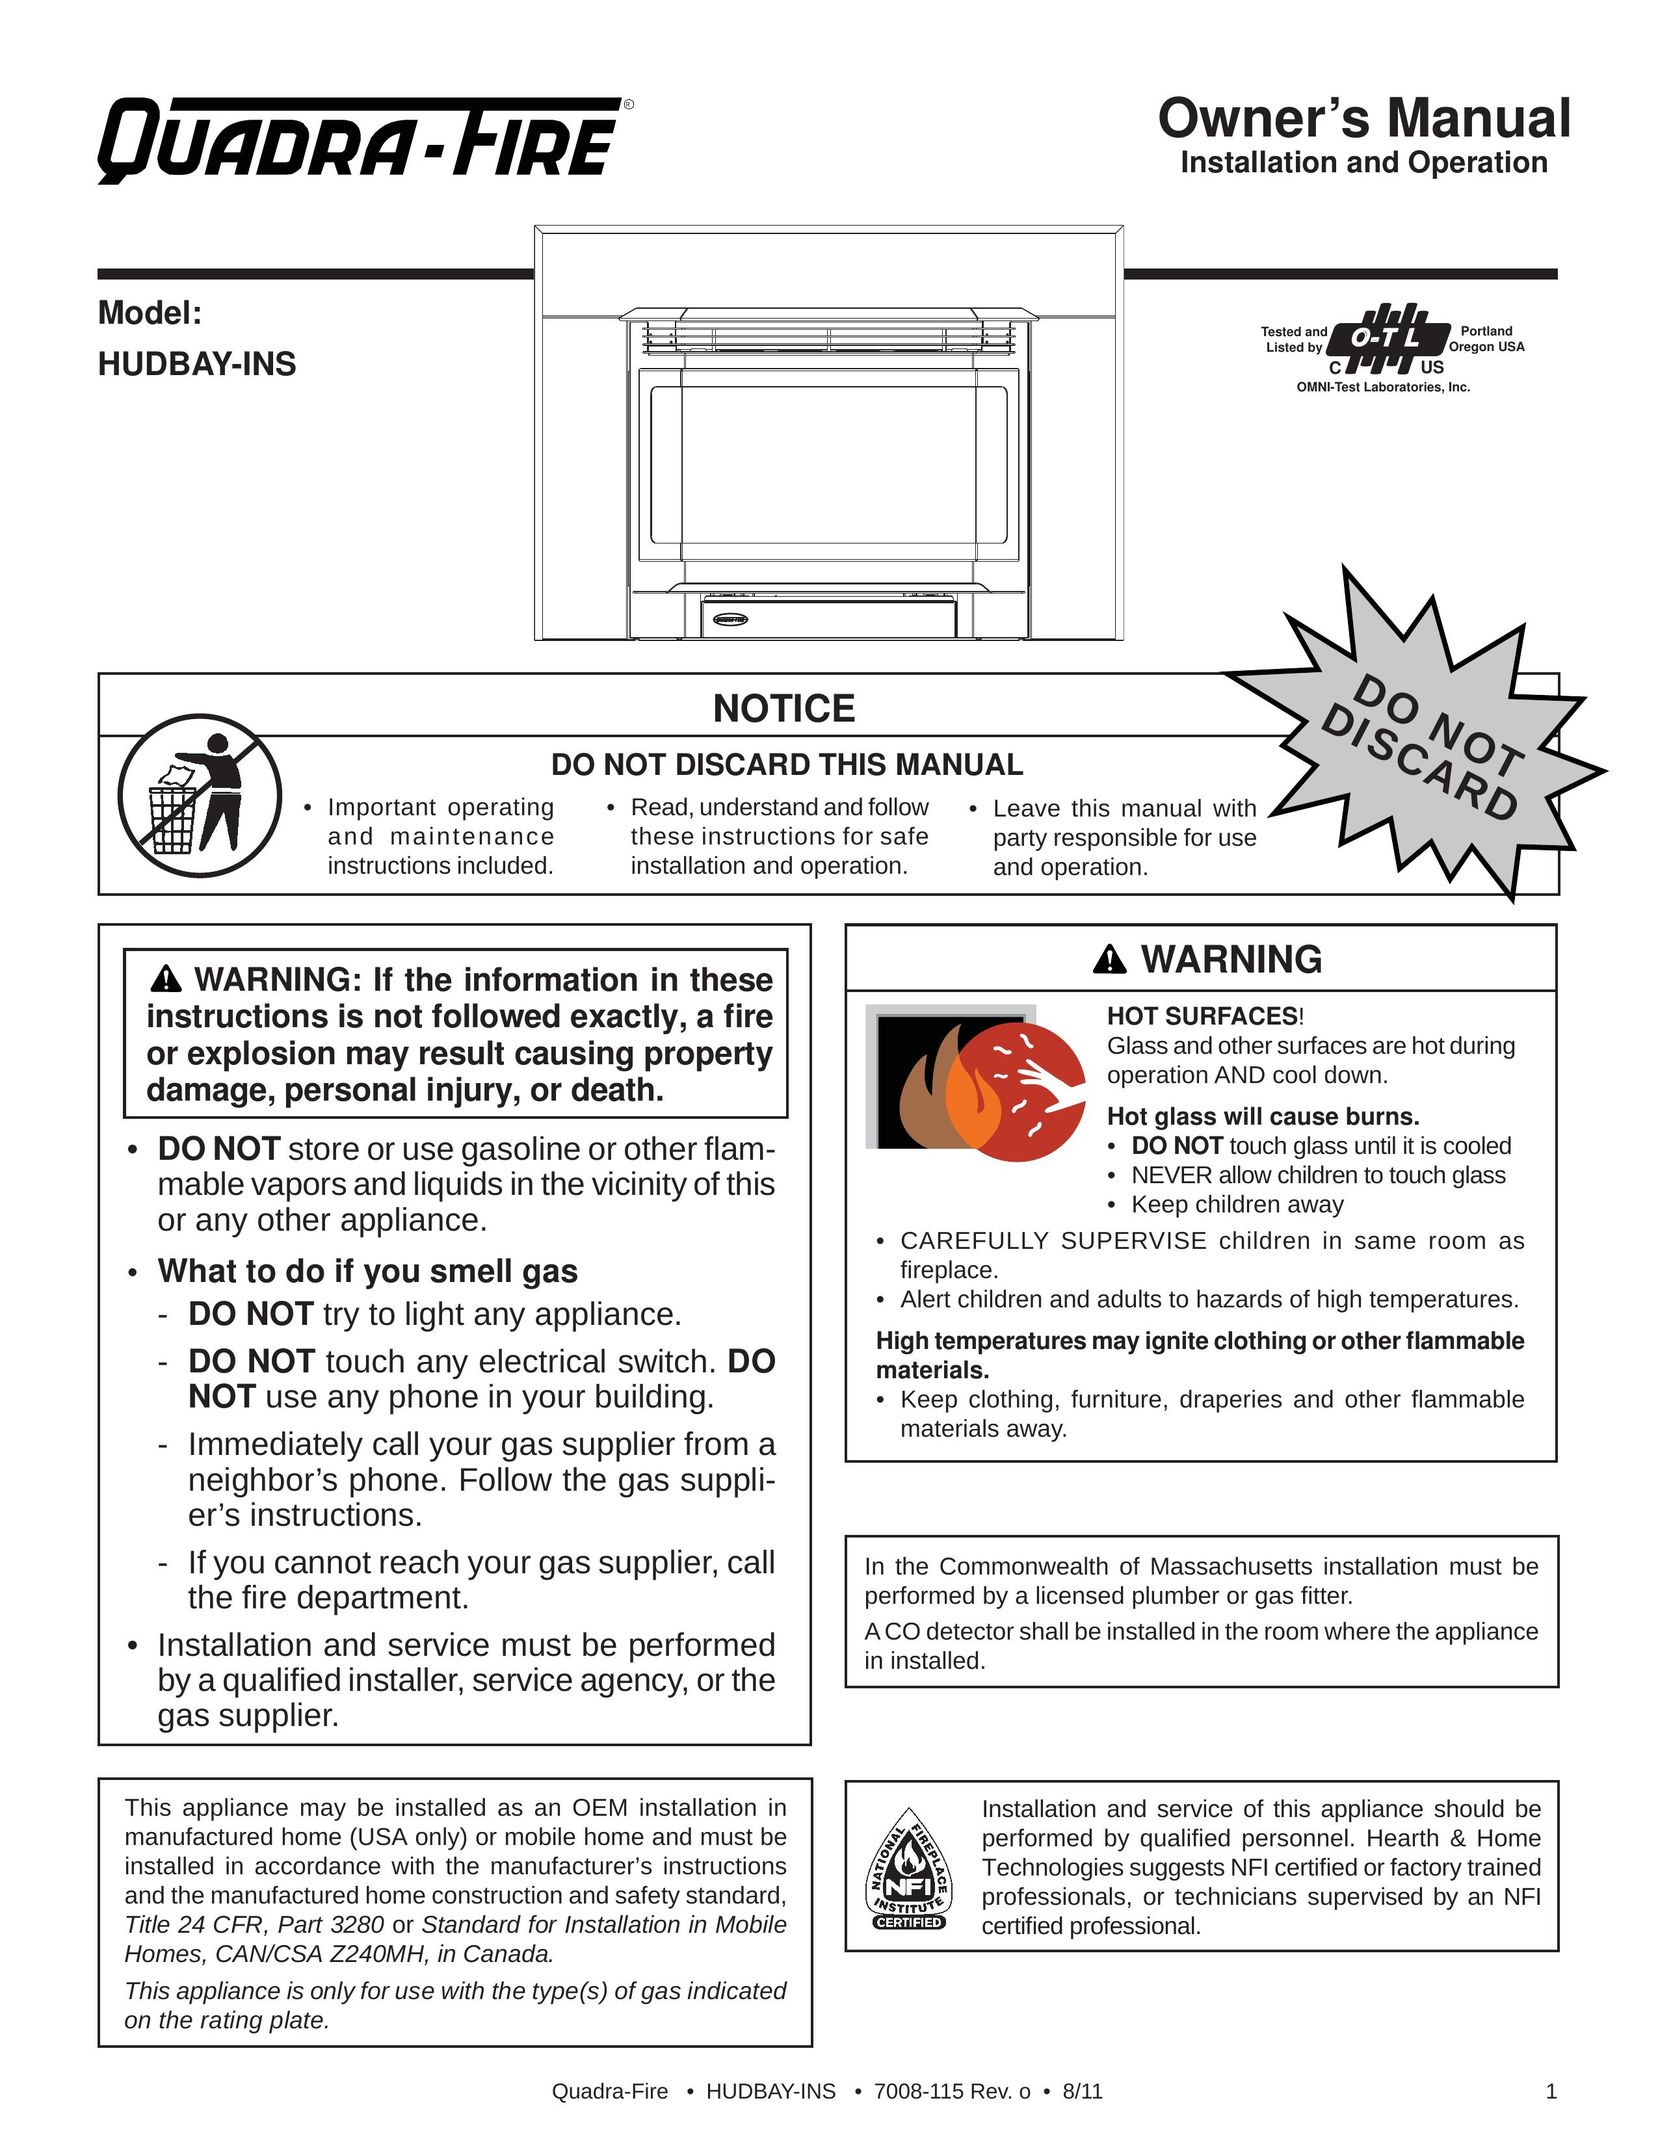 Quadra-Fire 7008-115 Indoor Fireplace User Manual